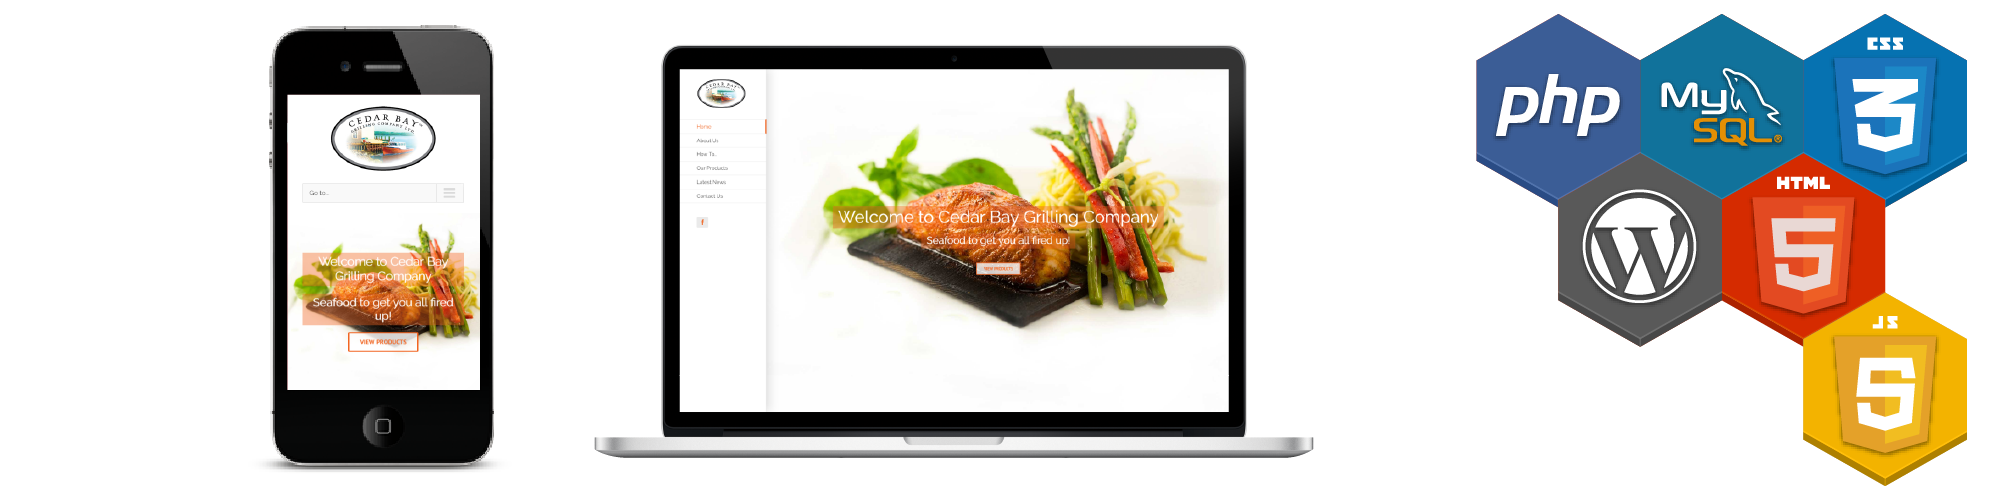 Cedar Bay Grilling Website